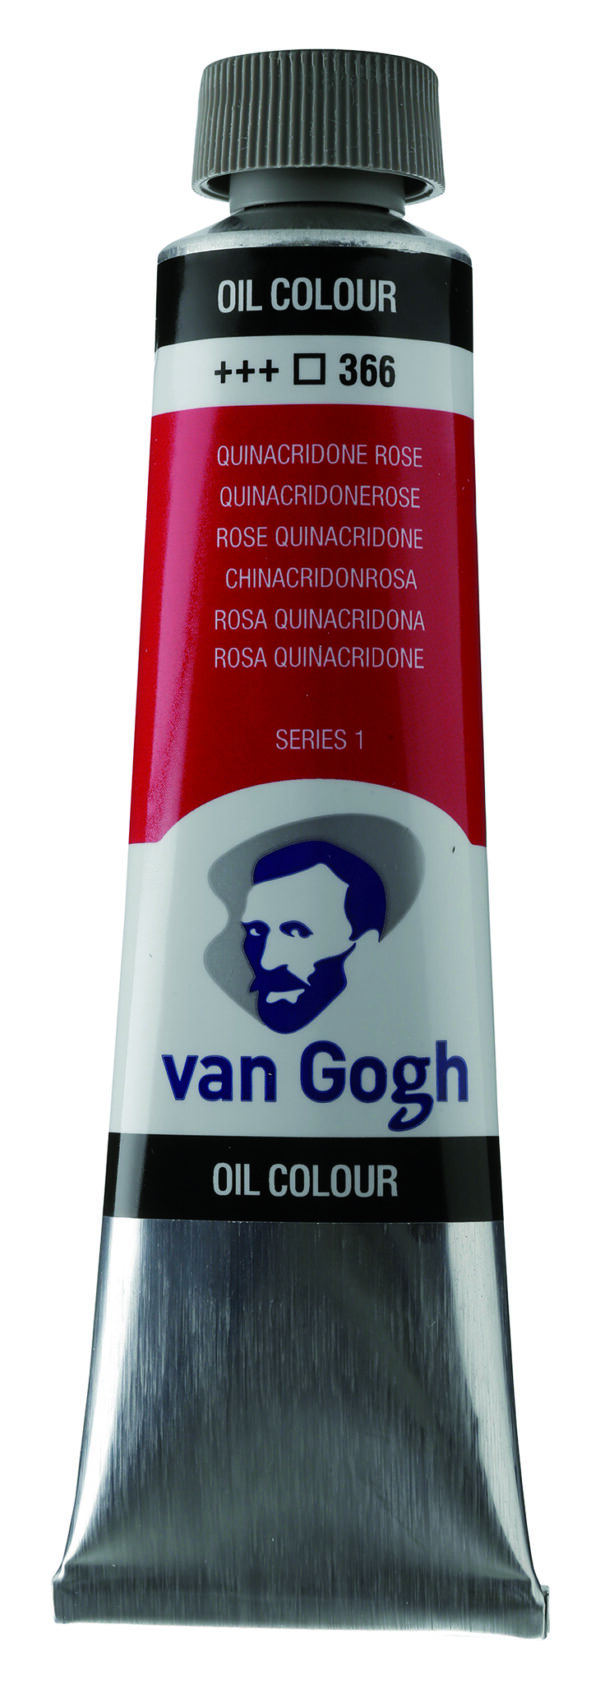 Van Gogh 366 Quinacridone rose - 40 ml